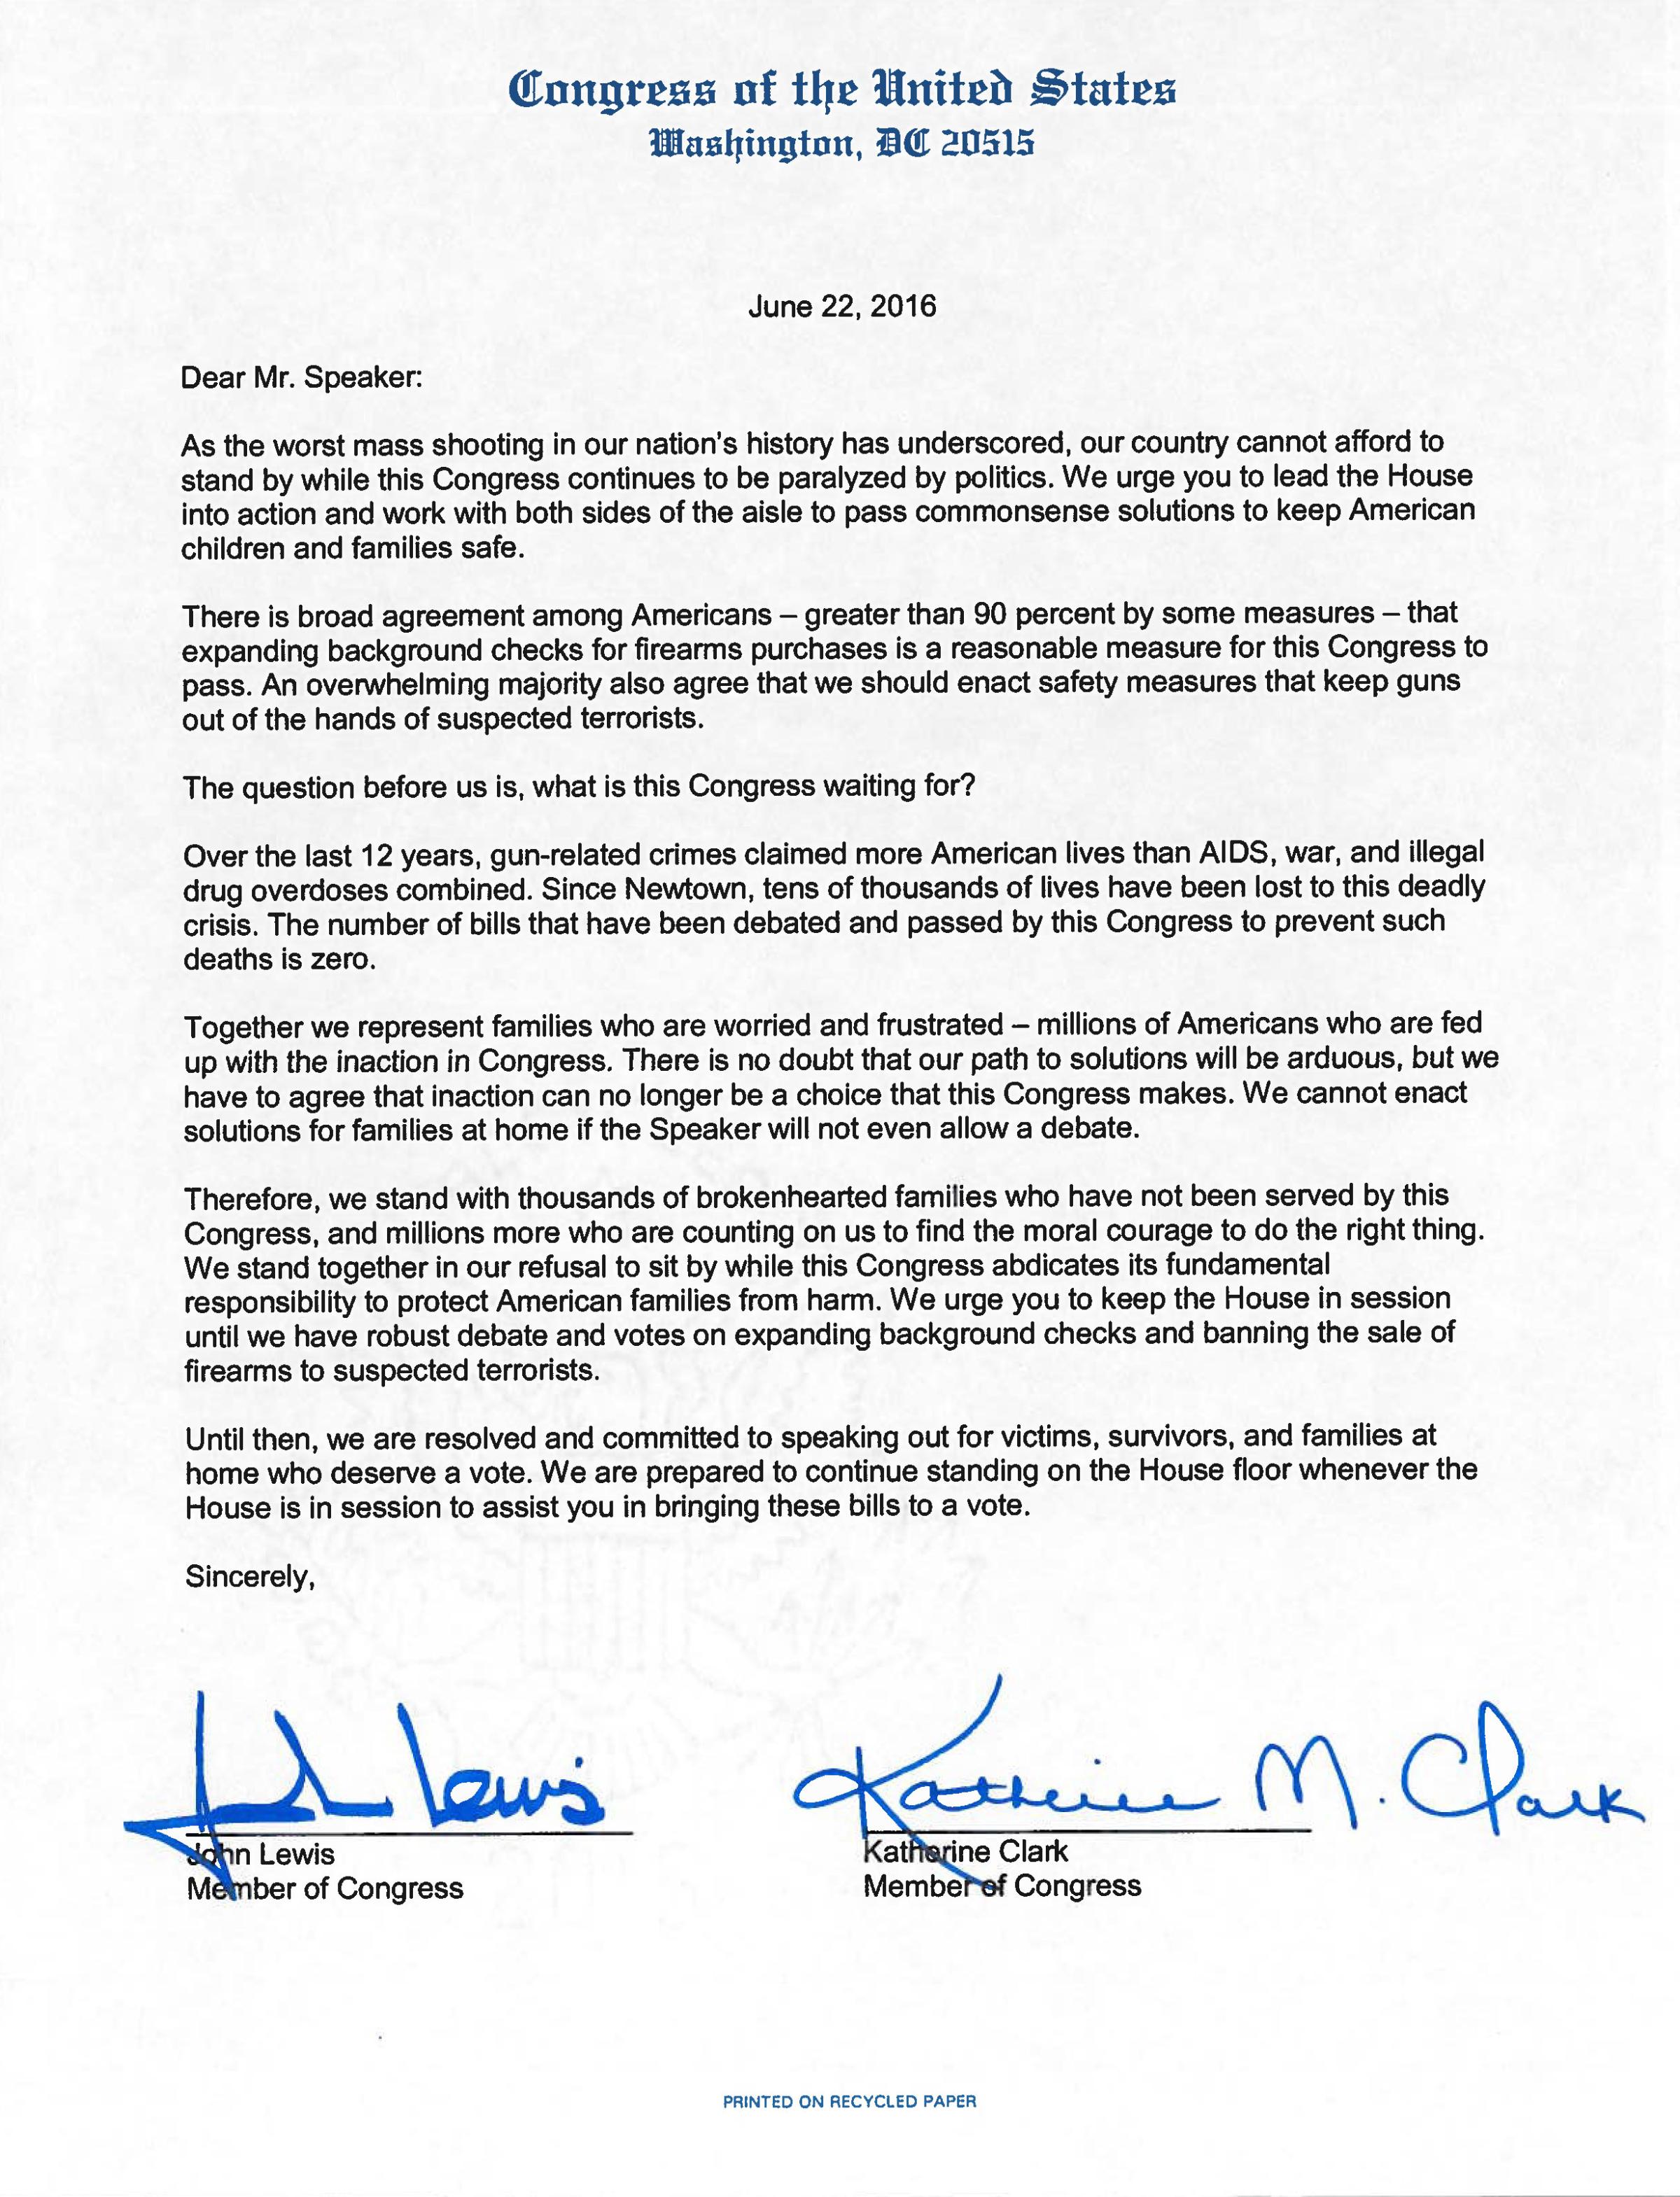 Letter delivered to Speaker Paul Ryan, June 22, 2016.